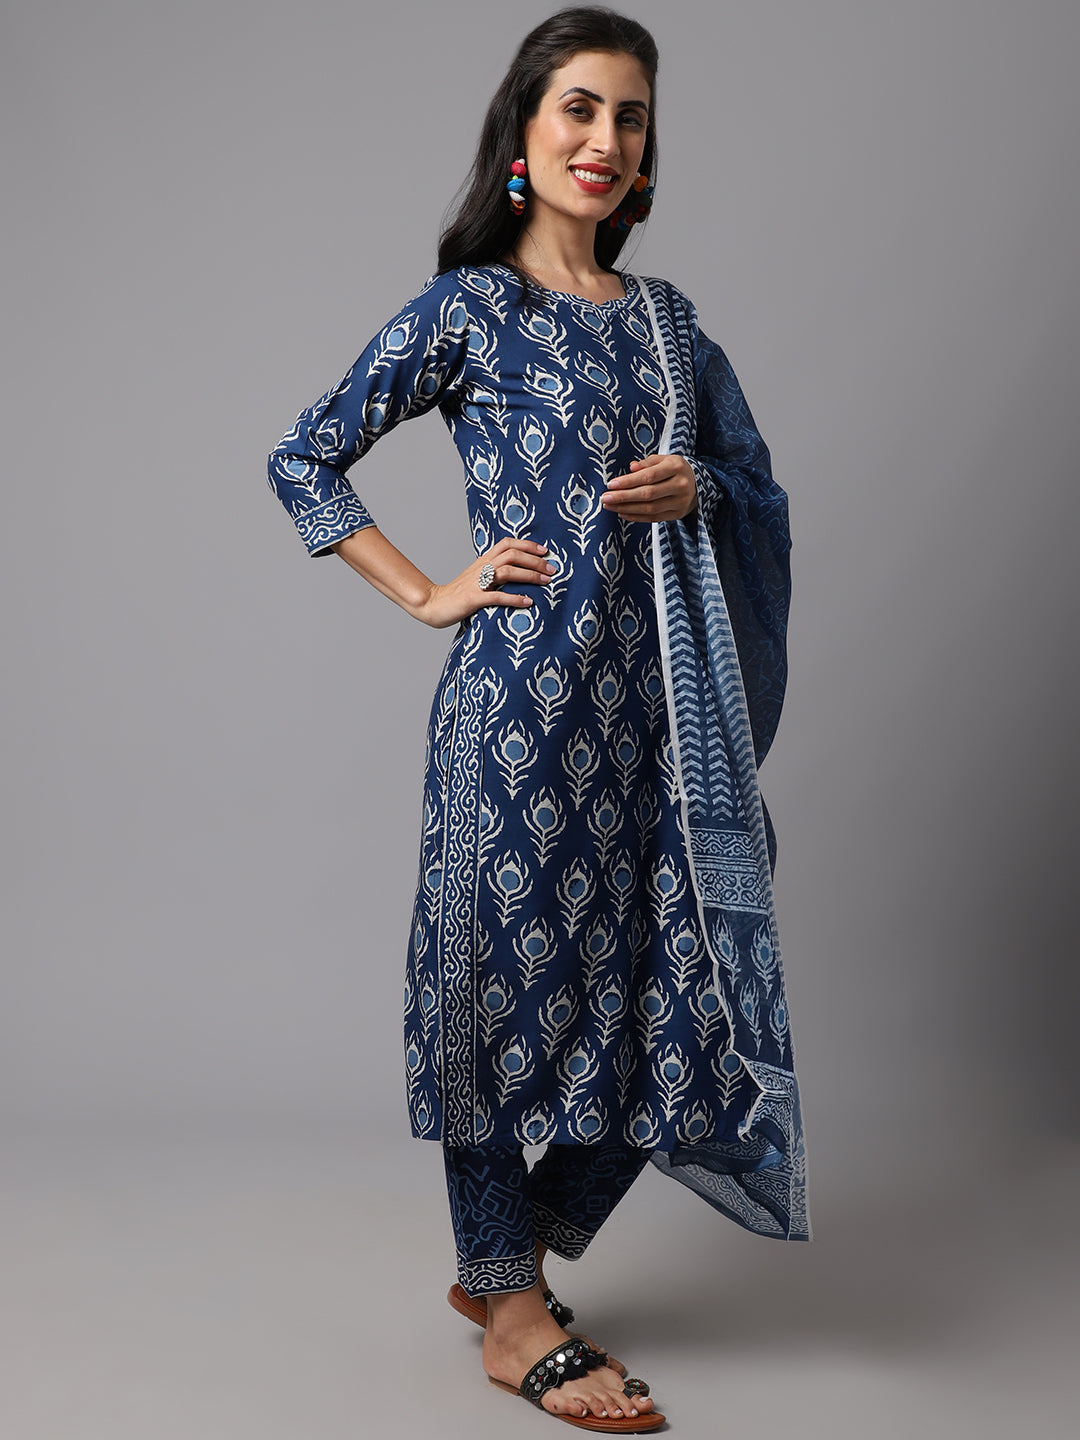 Women's Blue Printed Rayon Kurti Collection - Dwija Fashion